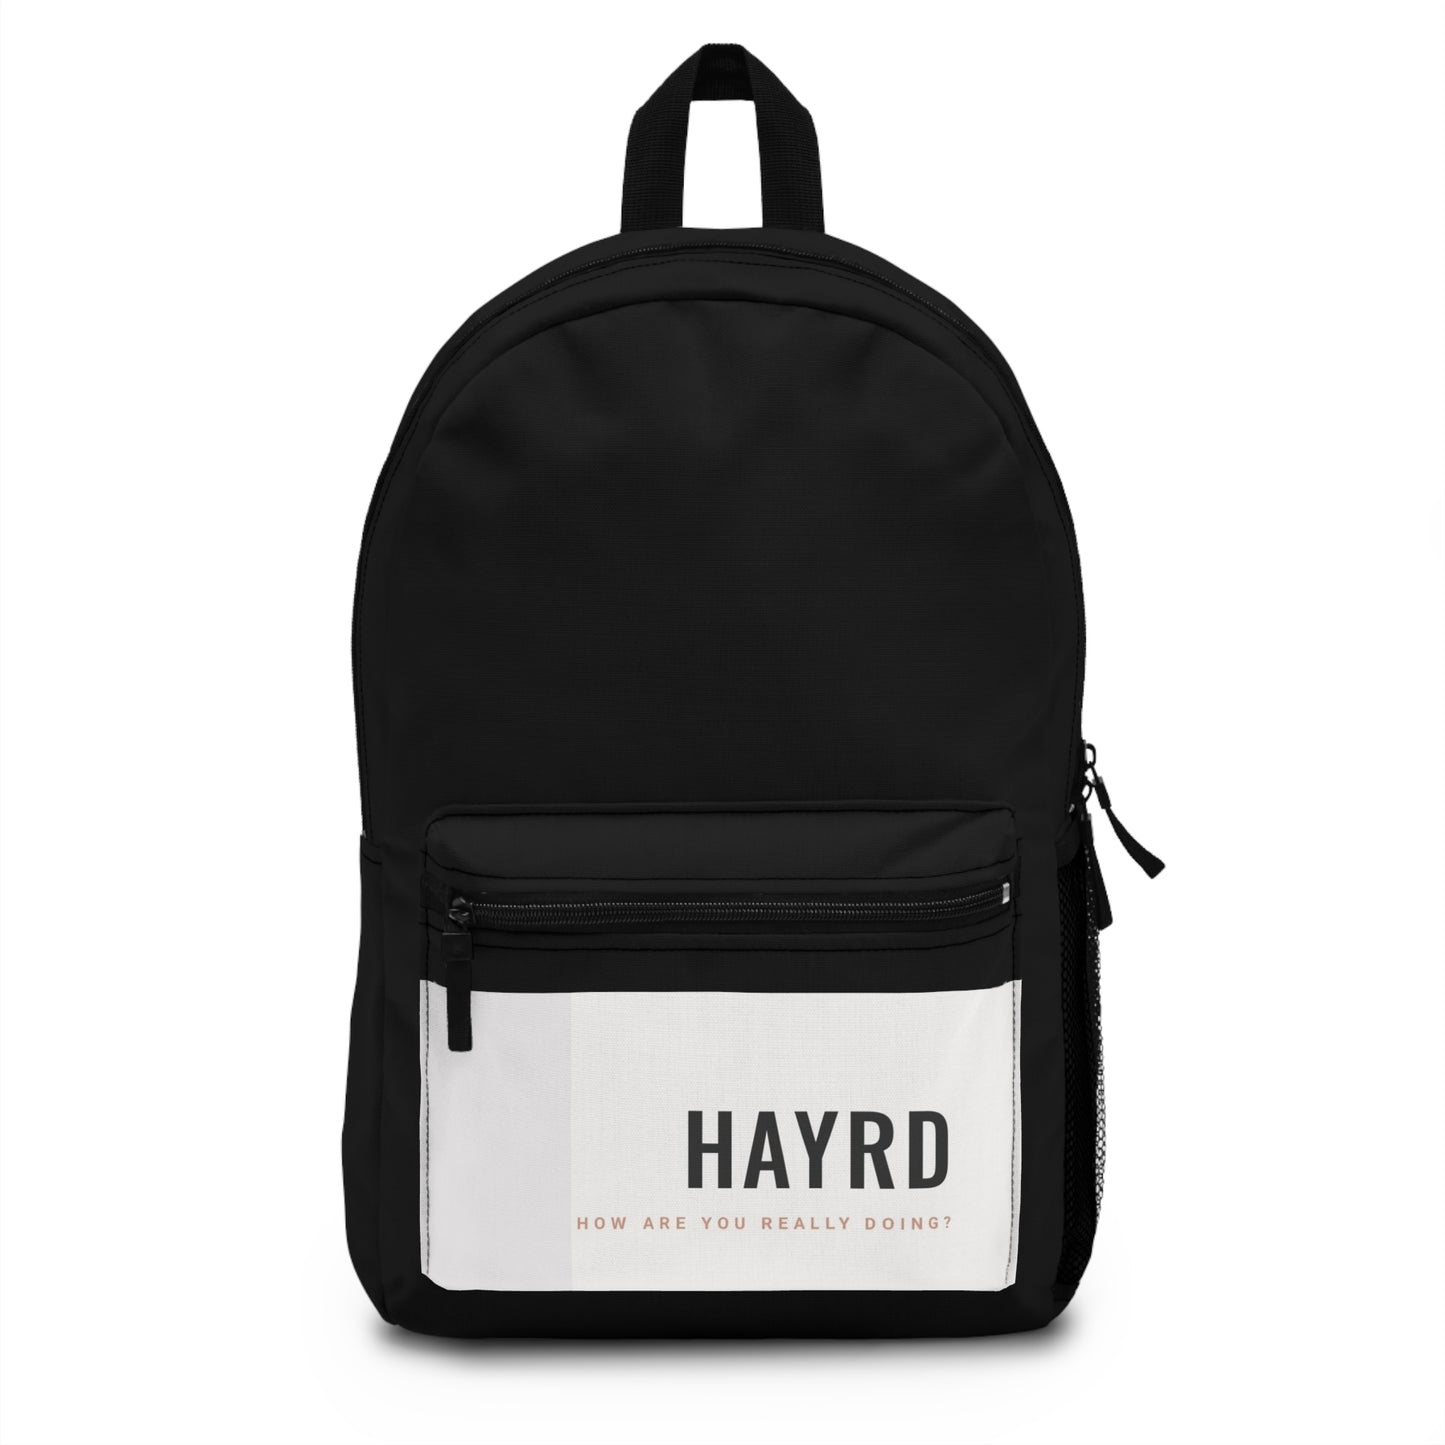 Hayrd Backpack